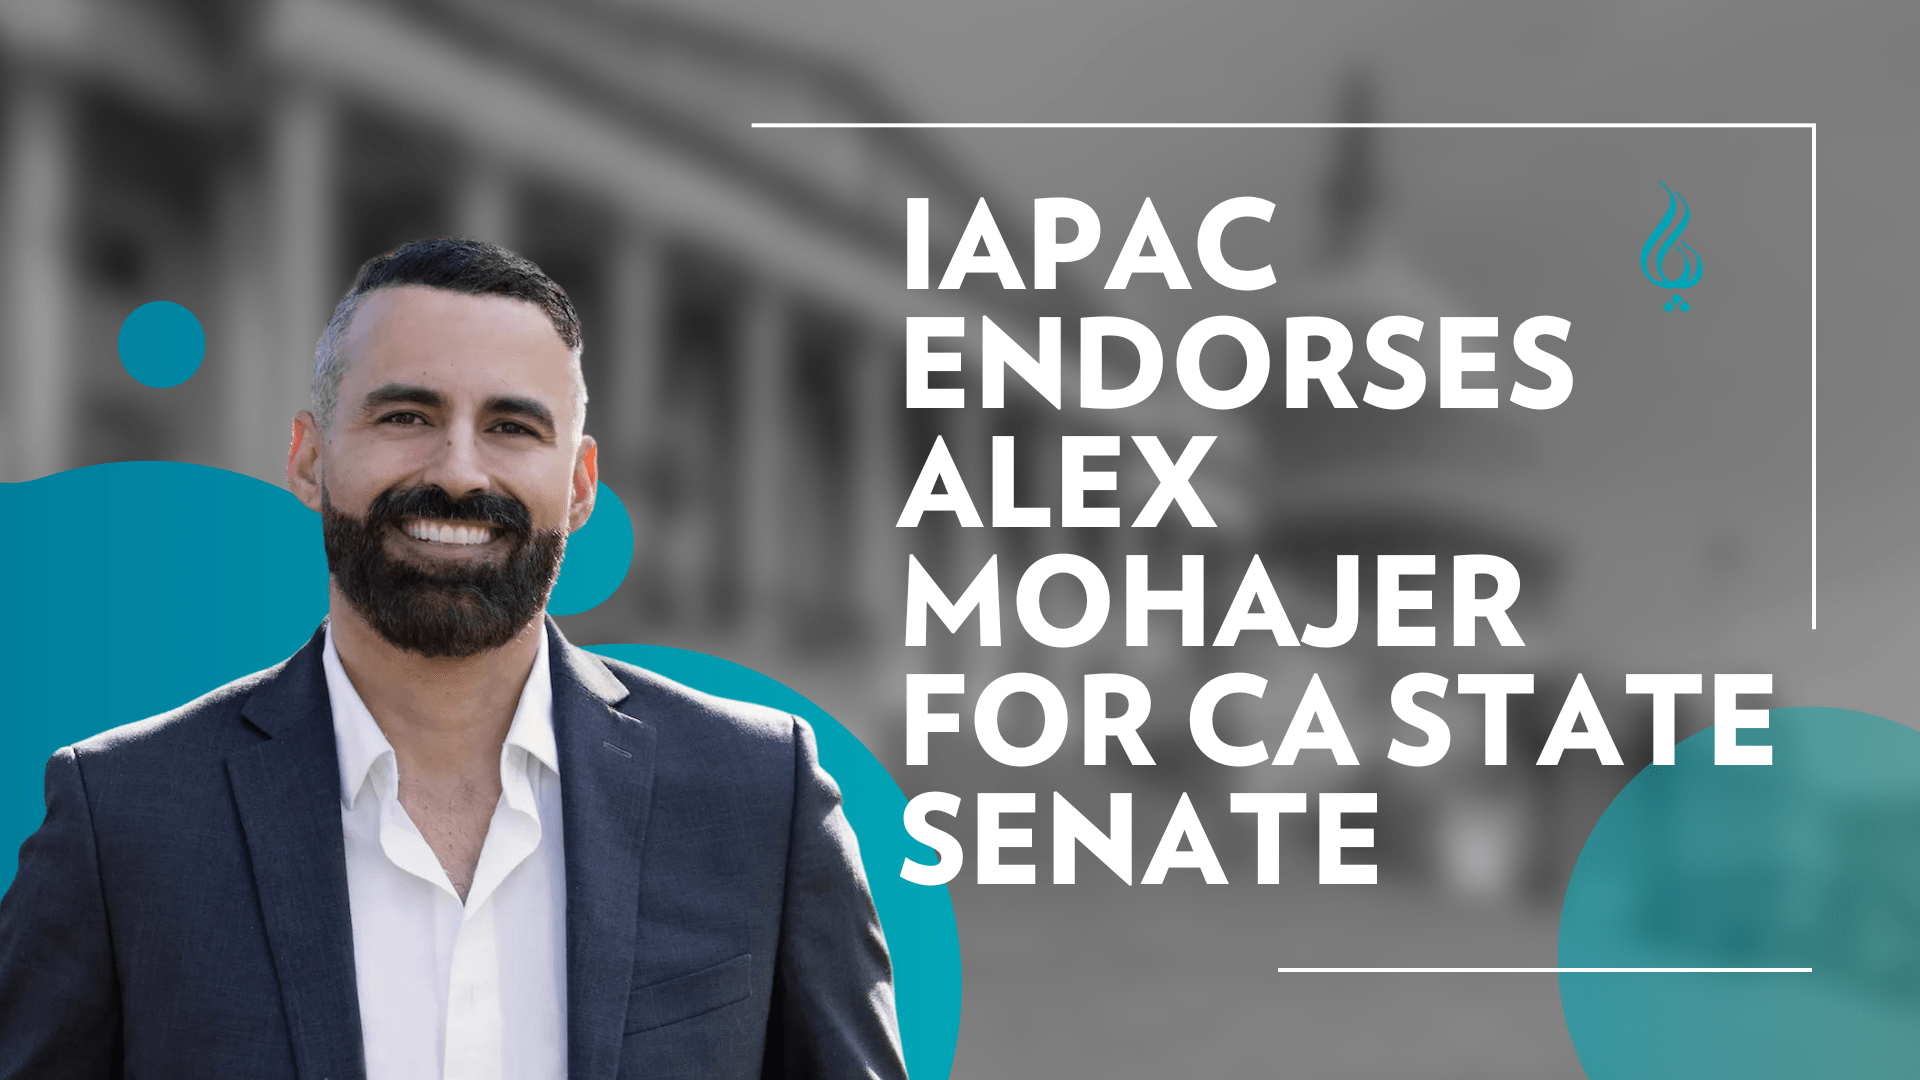 IAPAC Endorses Alex Mohajer for CA State Senate